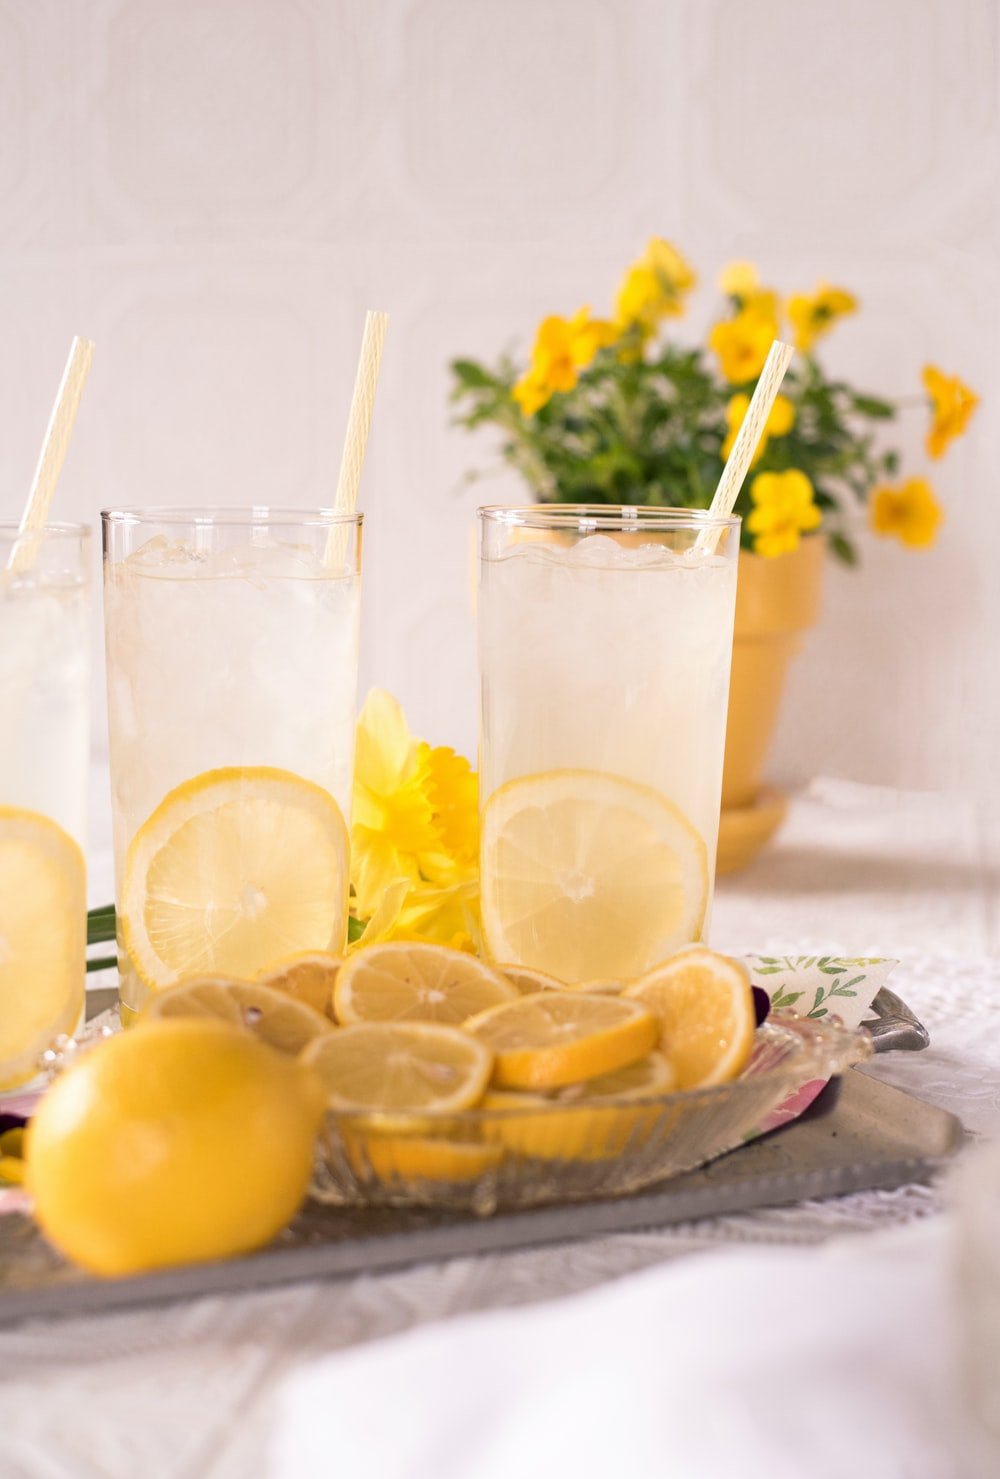 Lemon Juice Picture. Download Free Image